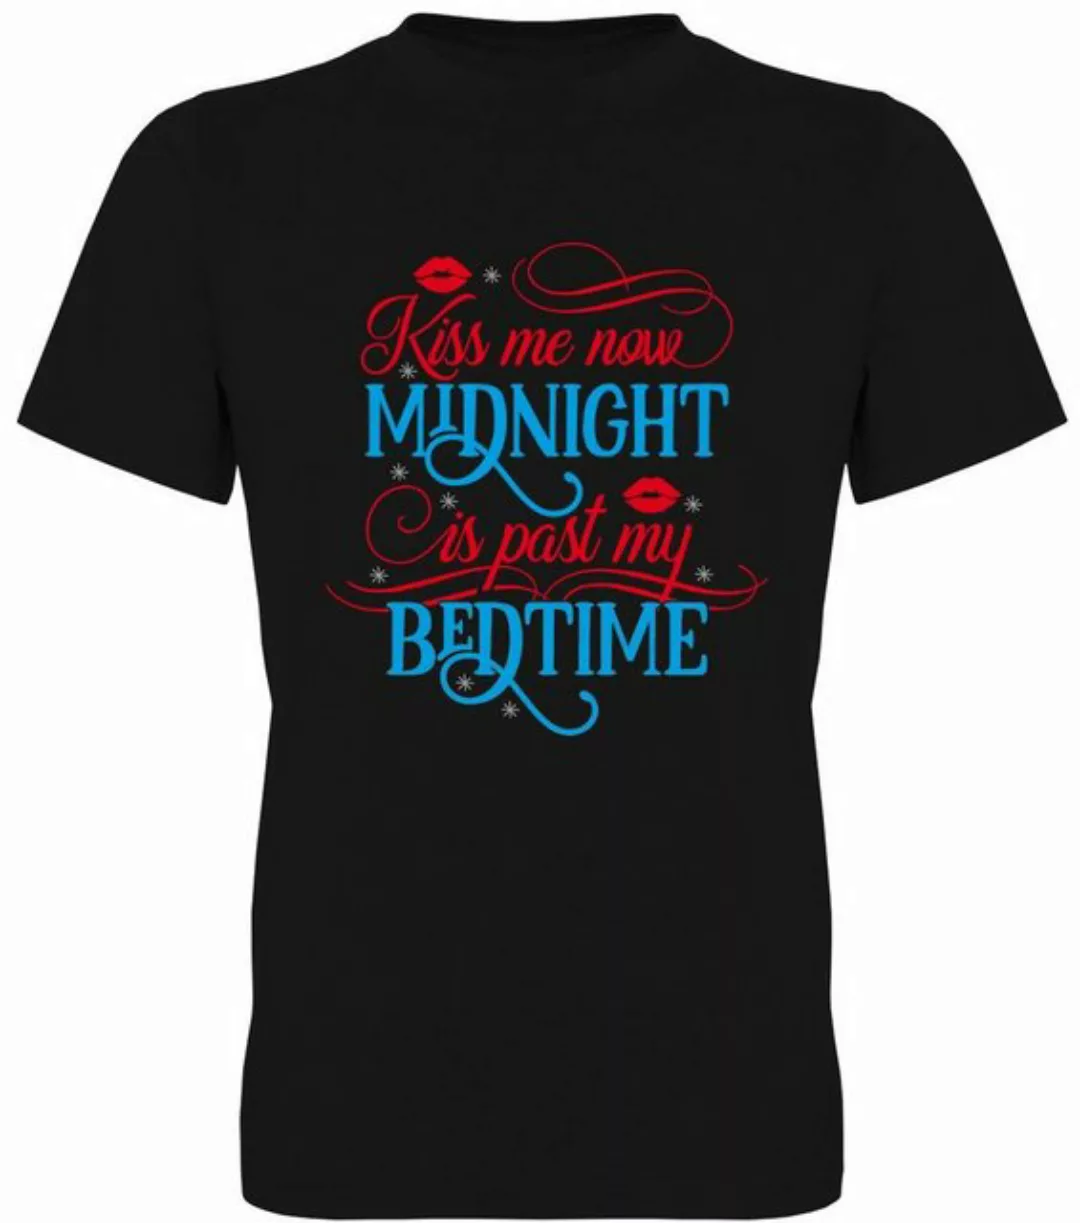 G-graphics T-Shirt Kiss me now – Midnight is past my bedtime Herren T-Shirt günstig online kaufen